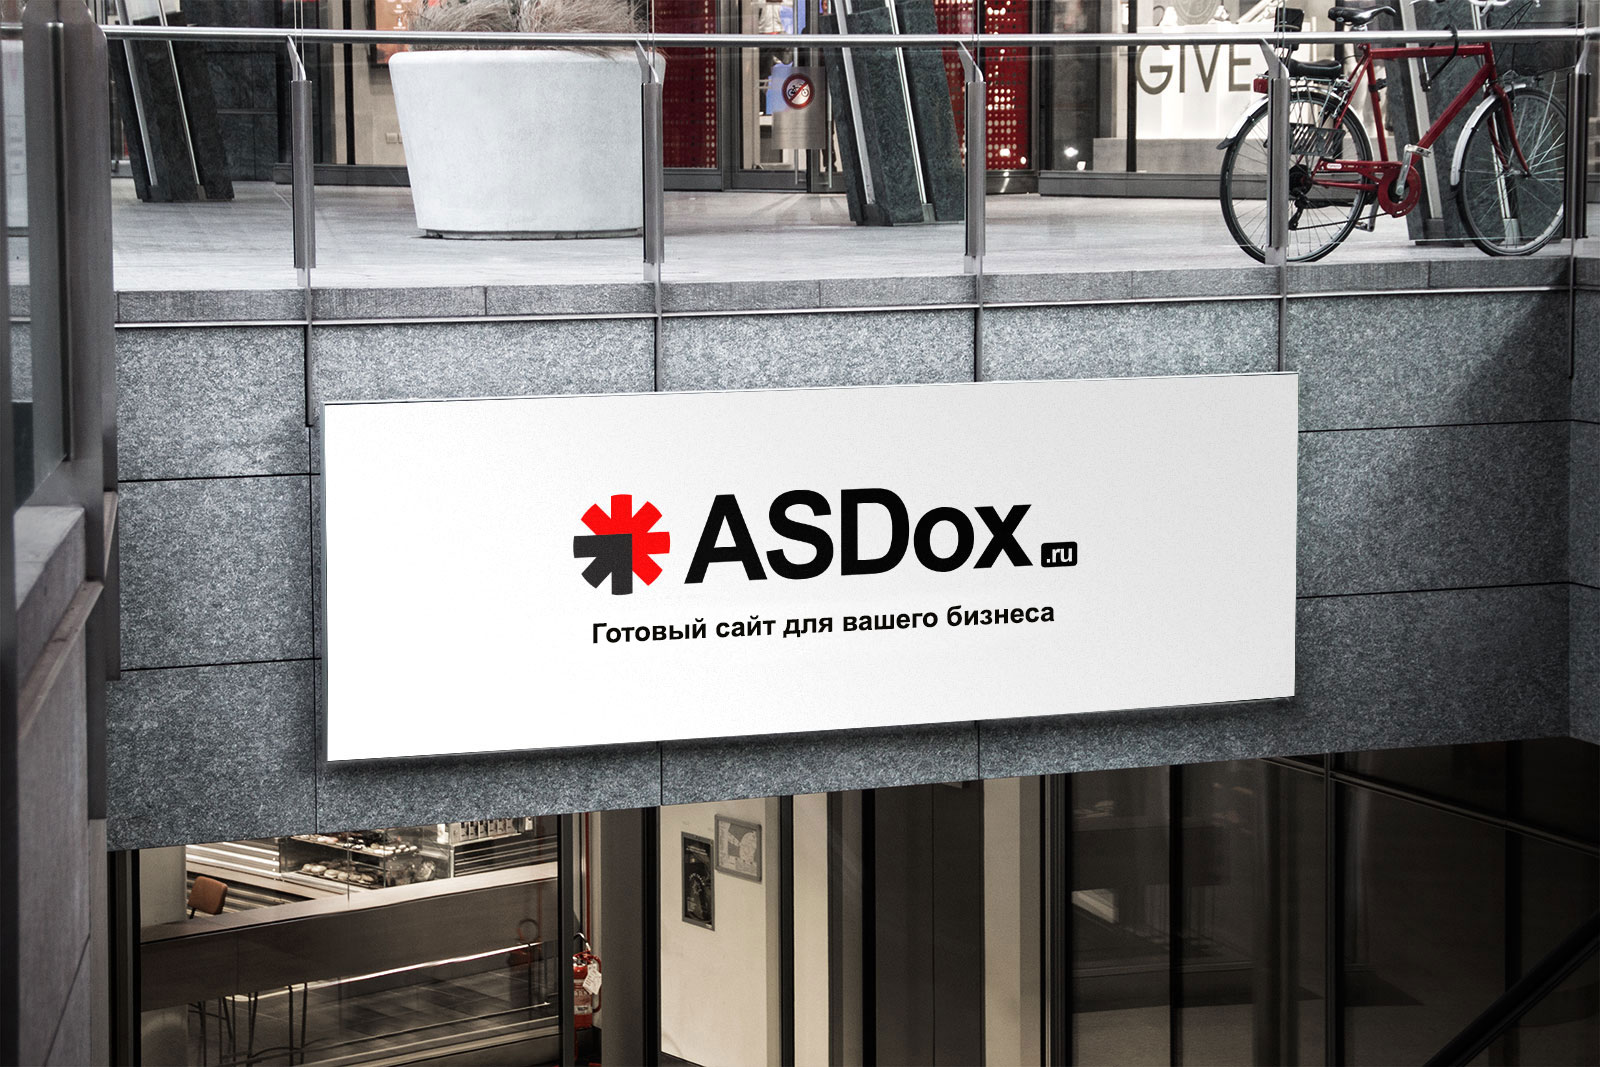 ASDox